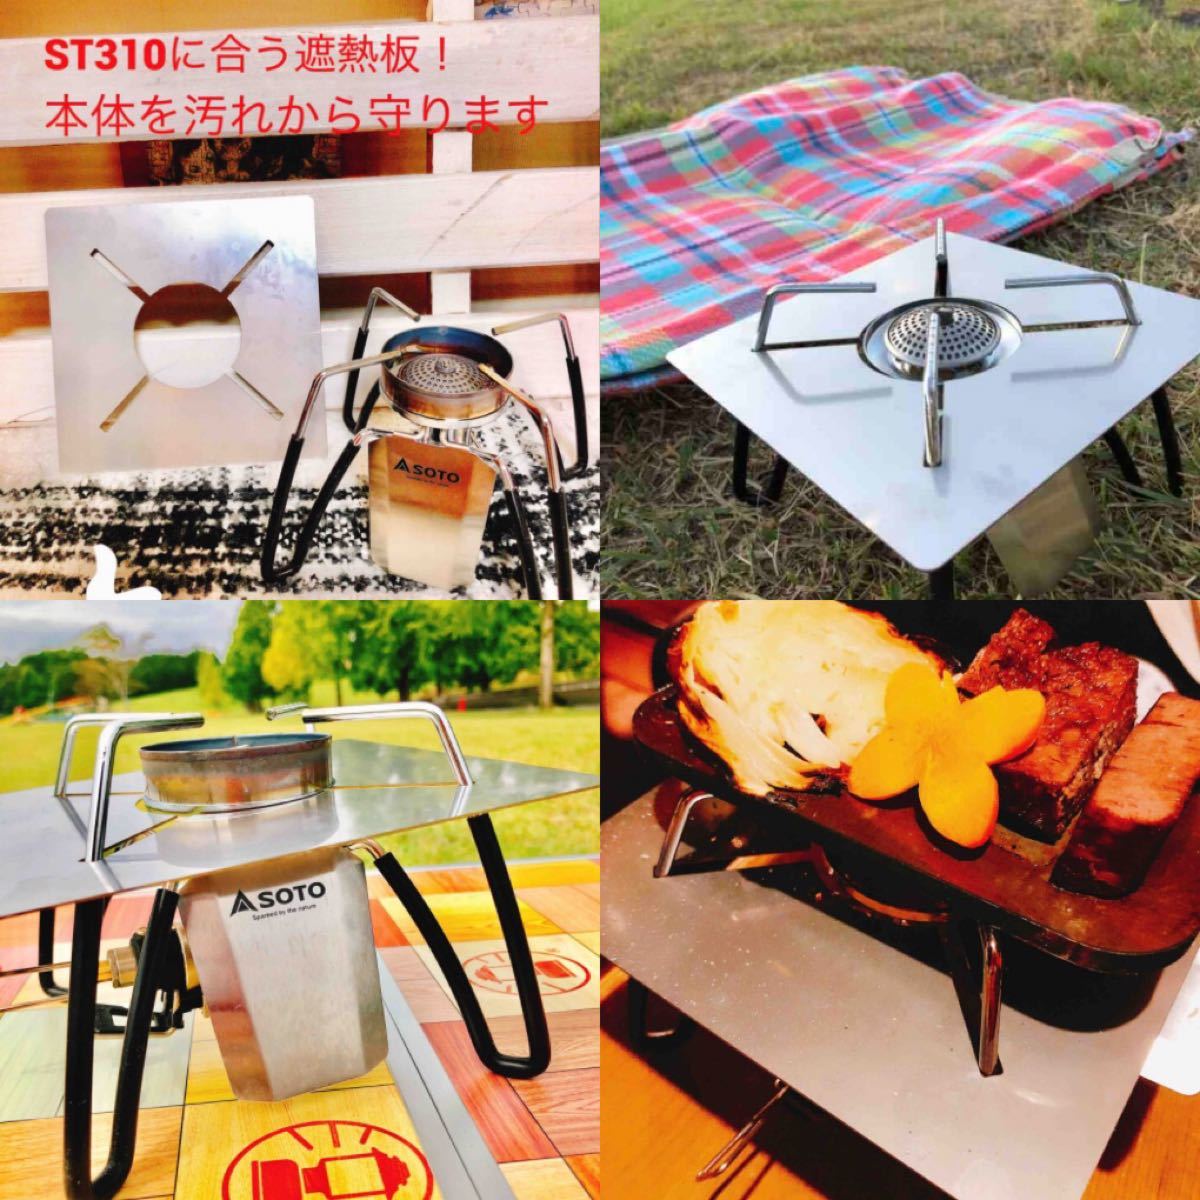 SOTO/ST-310/遮熱板/ イワタニ/単品 新富士バーナー キャンプ アウトドア  調理器具 レジャー